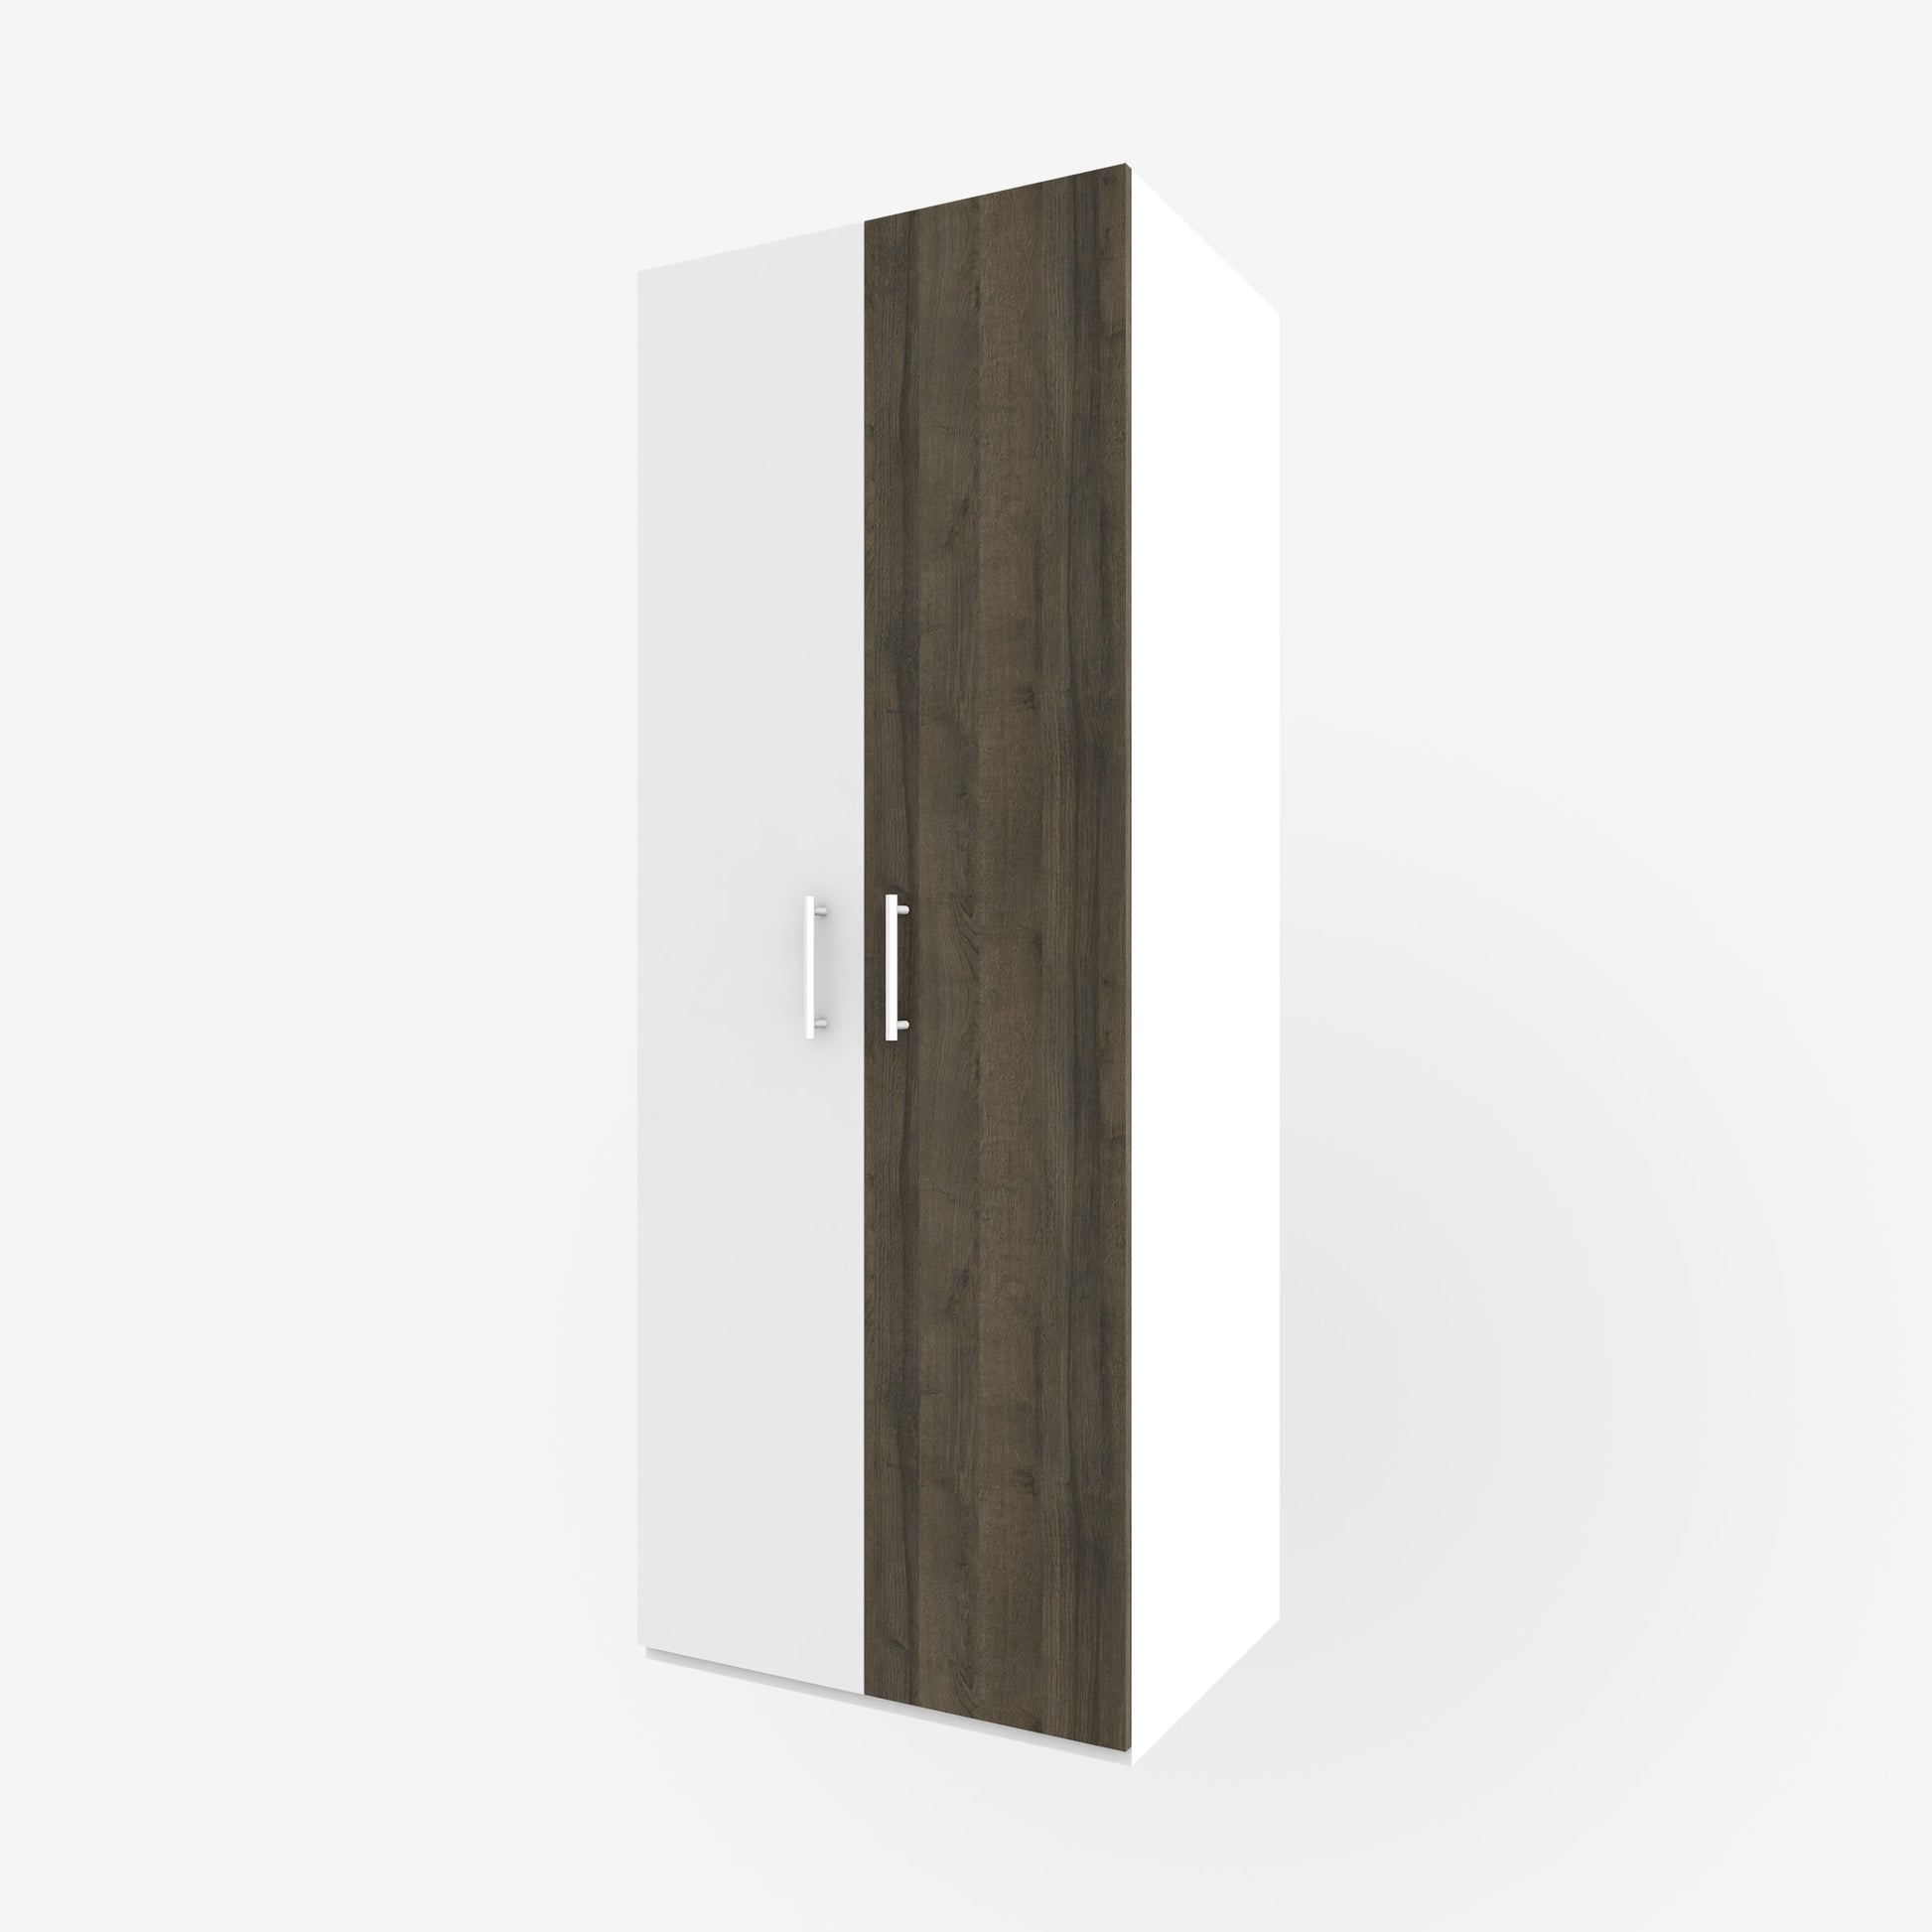 15" x 79" dark wood tone rockwood slab door for Ikea or Swedeboxx pax closet cabinet